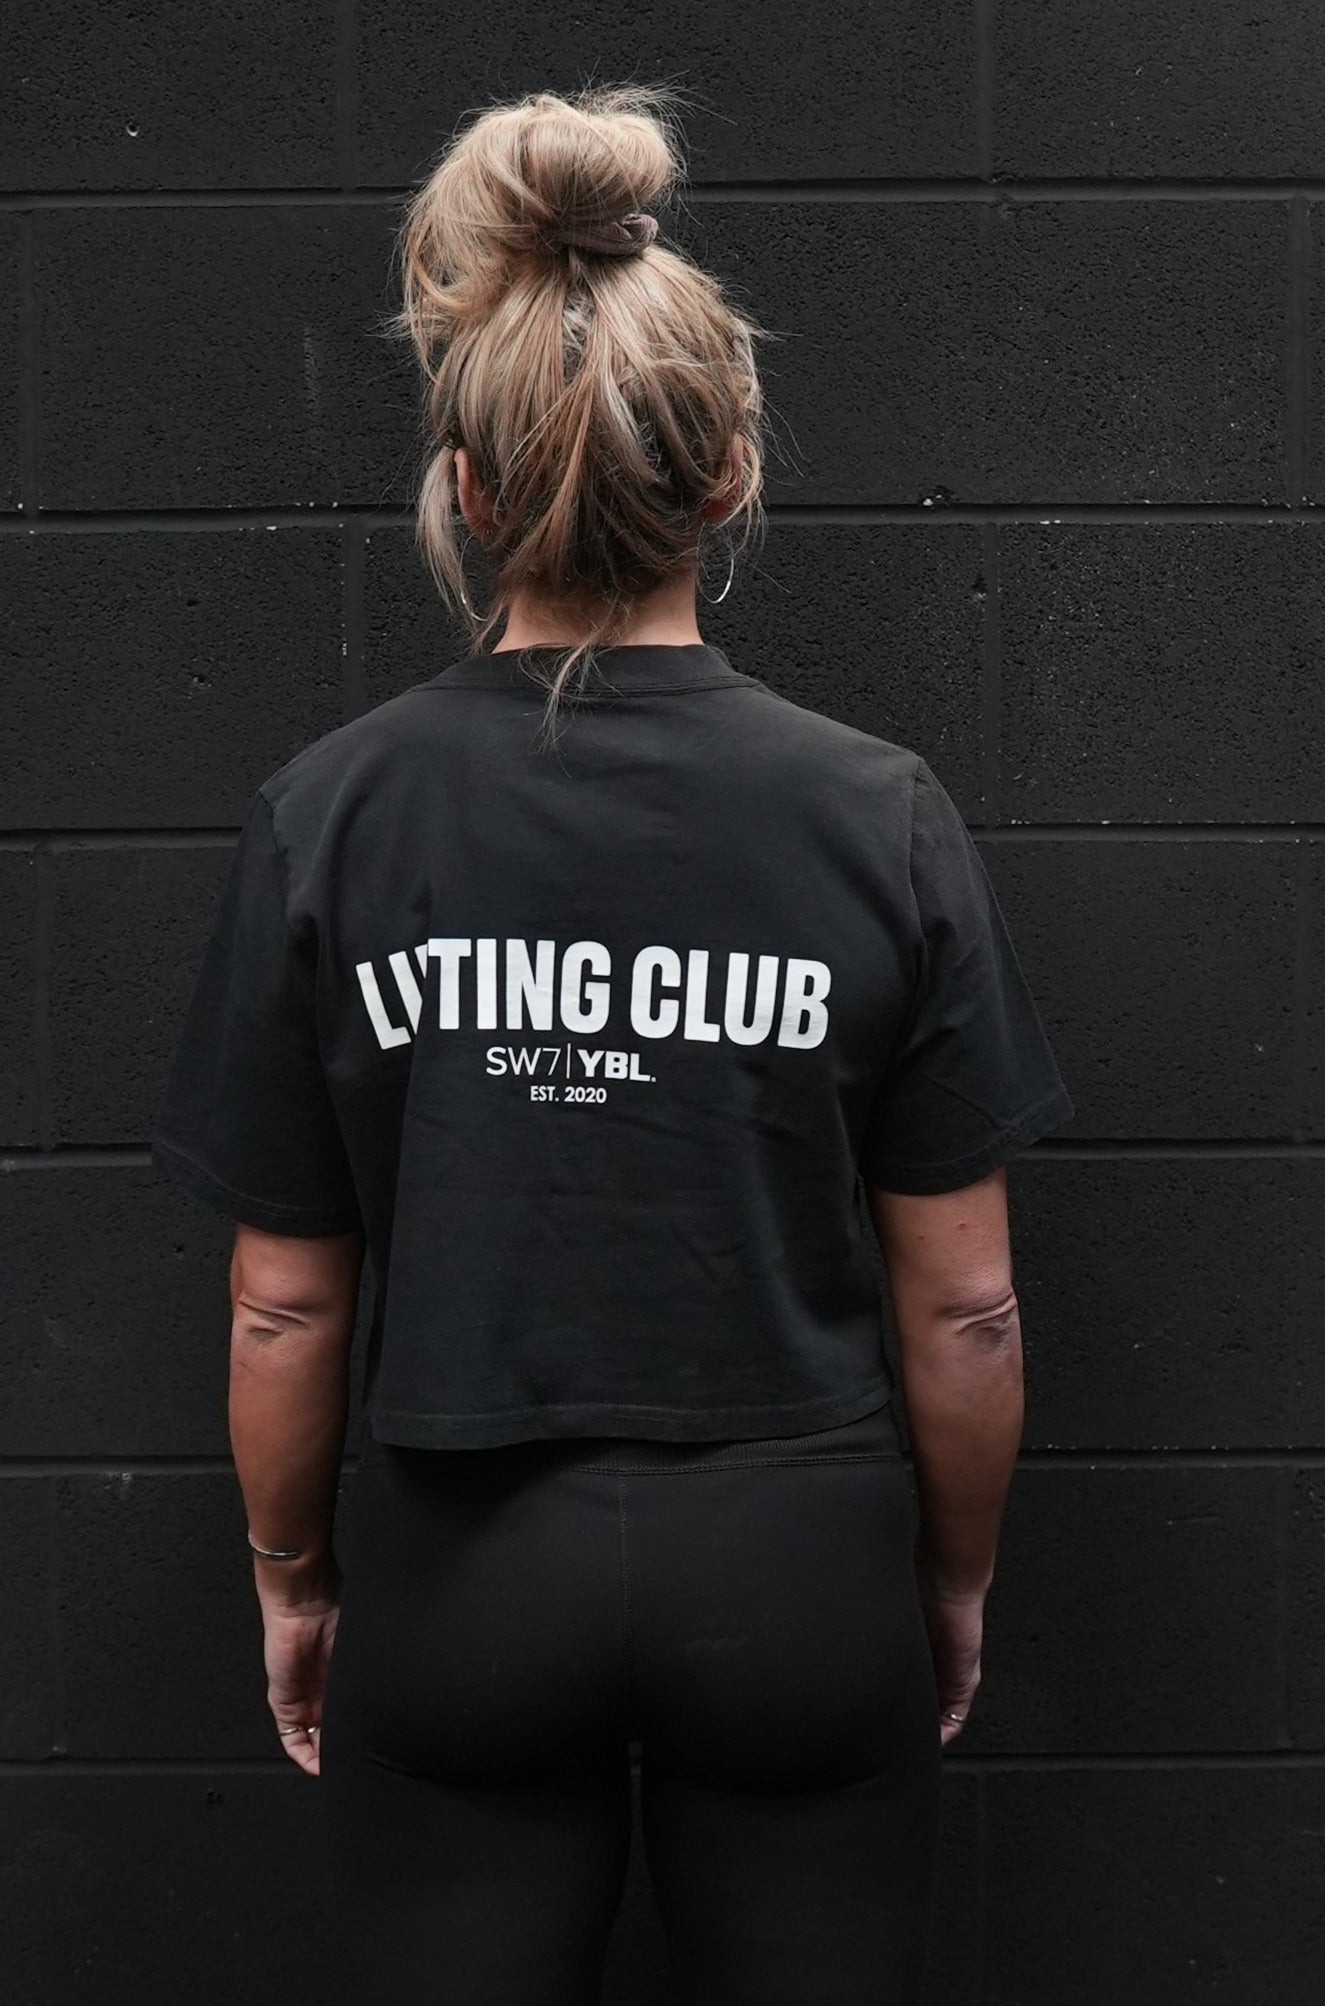 Lifting Club Heavy Faded Crop Tee in Faded Black